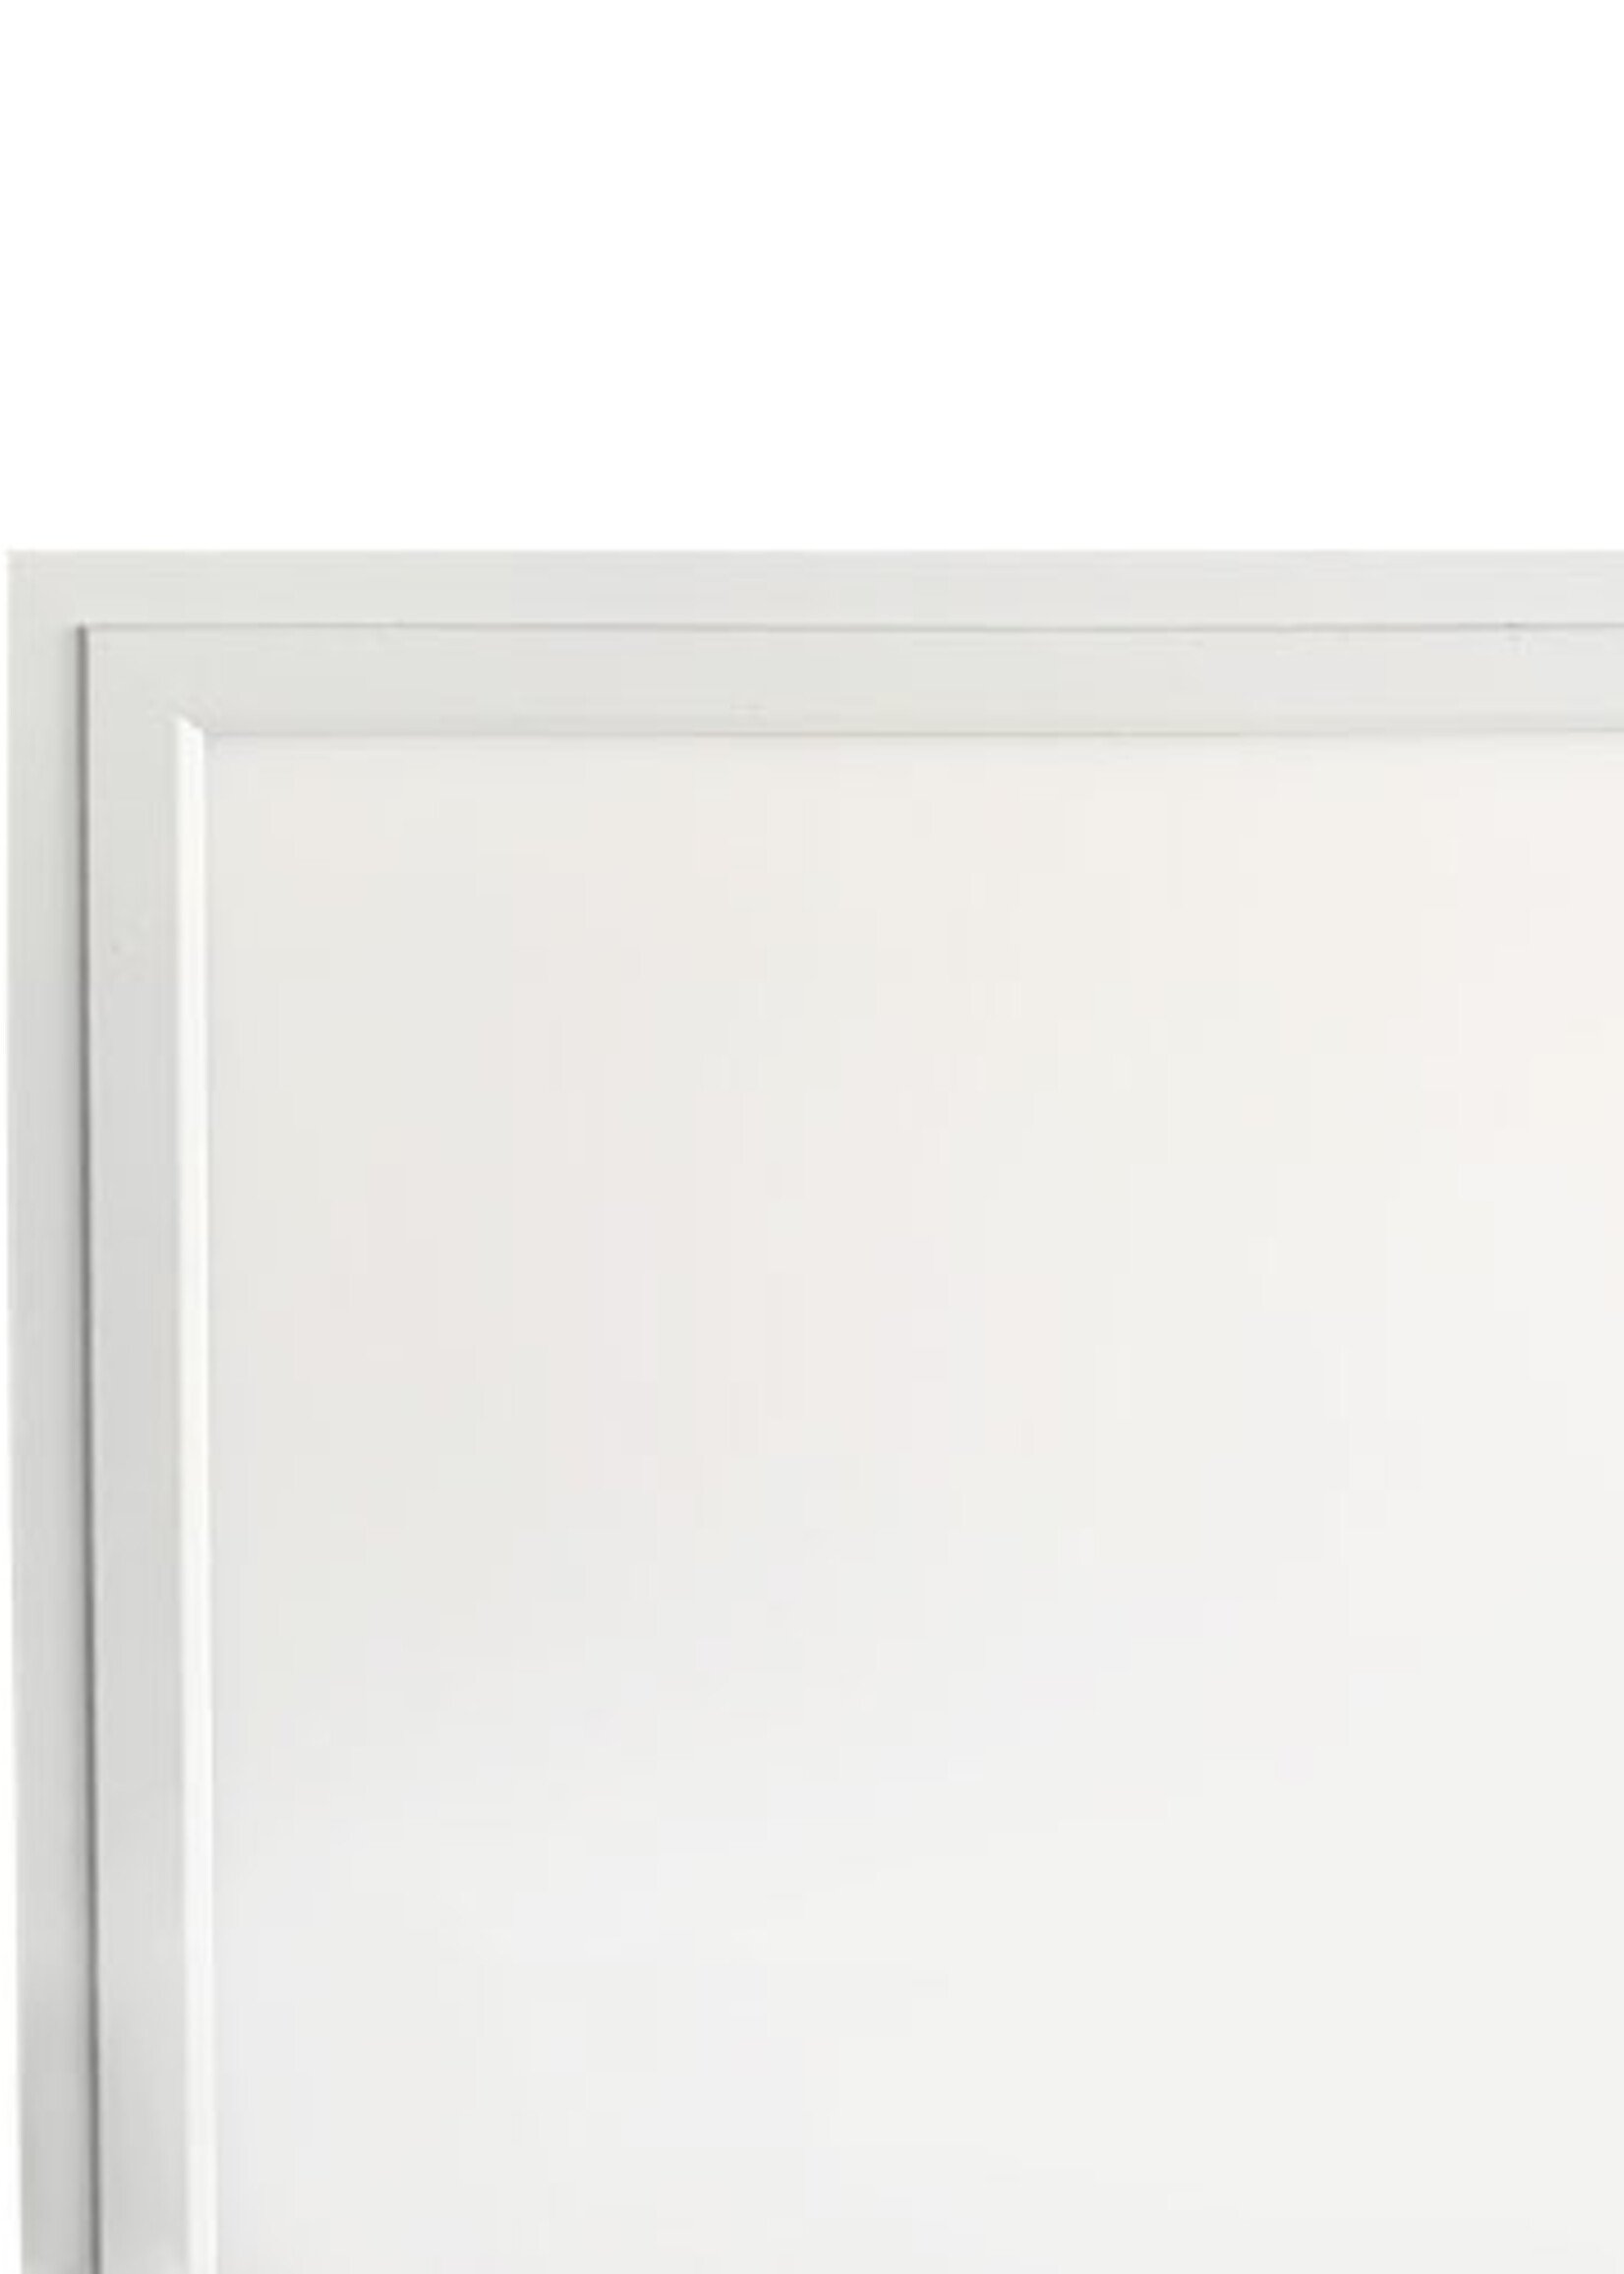 LEDWINKEL-Online LED Panel 60x60cm 36W 110lm/W Back-lit